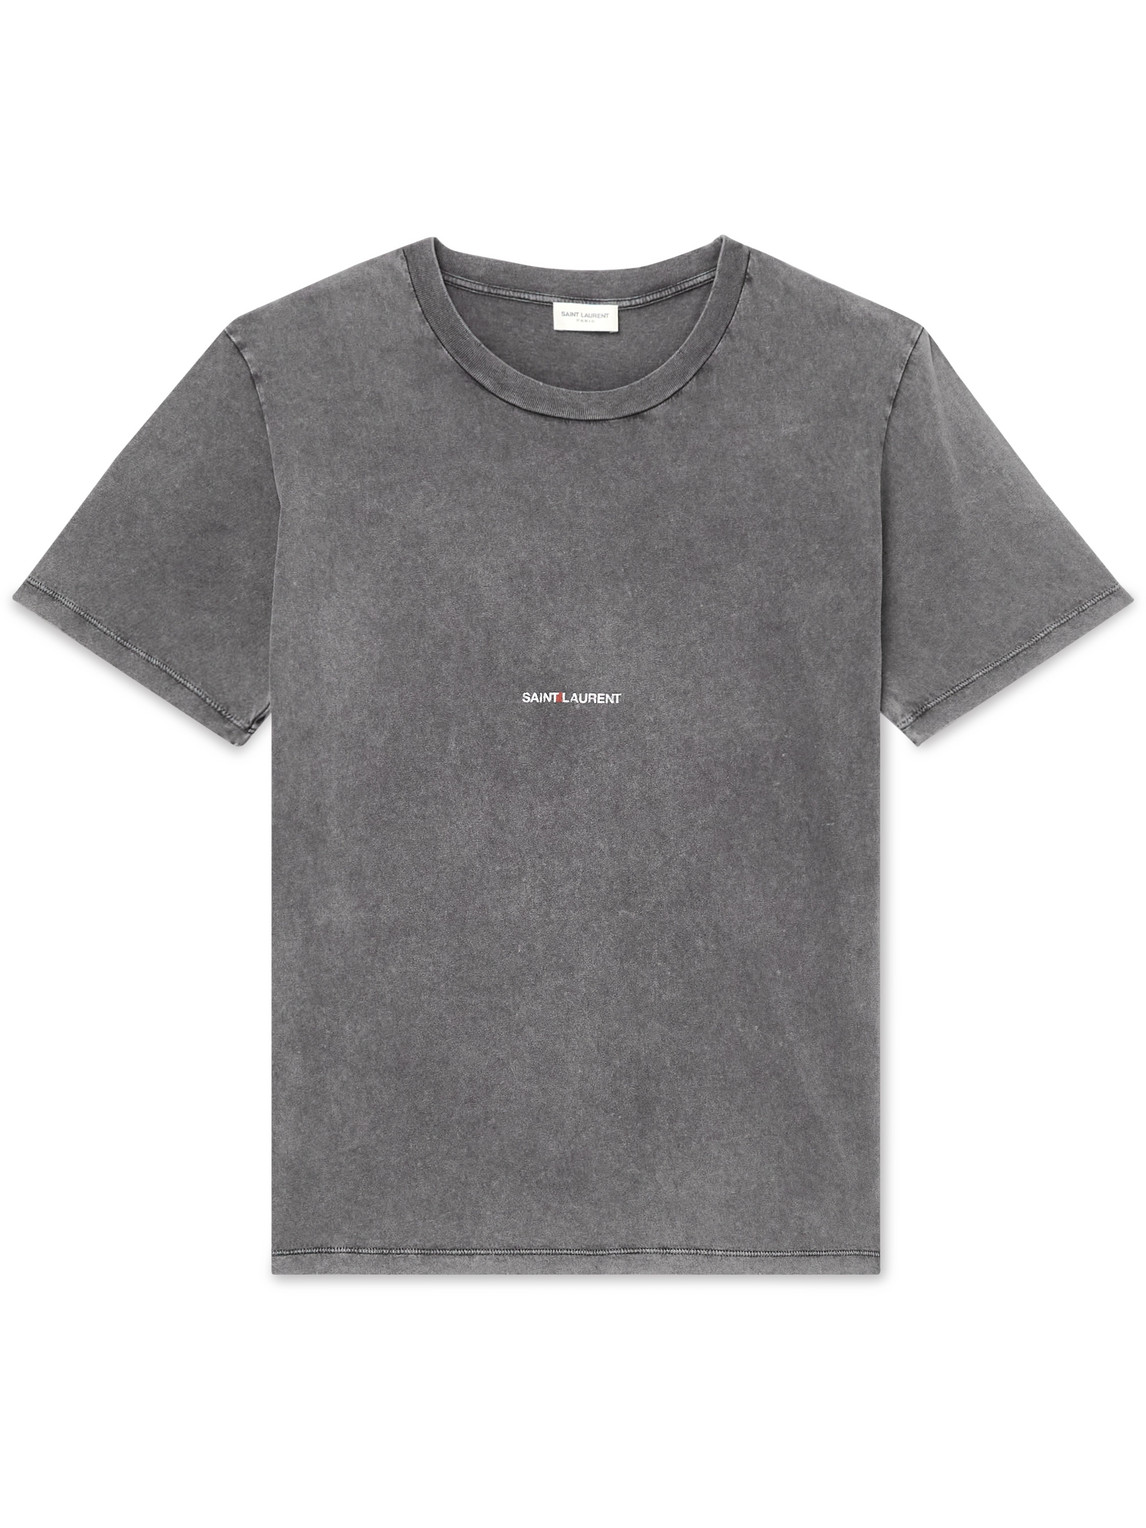 SAINT LAURENT Distressed Logo-Print Cotton-Jersey T-Shirt